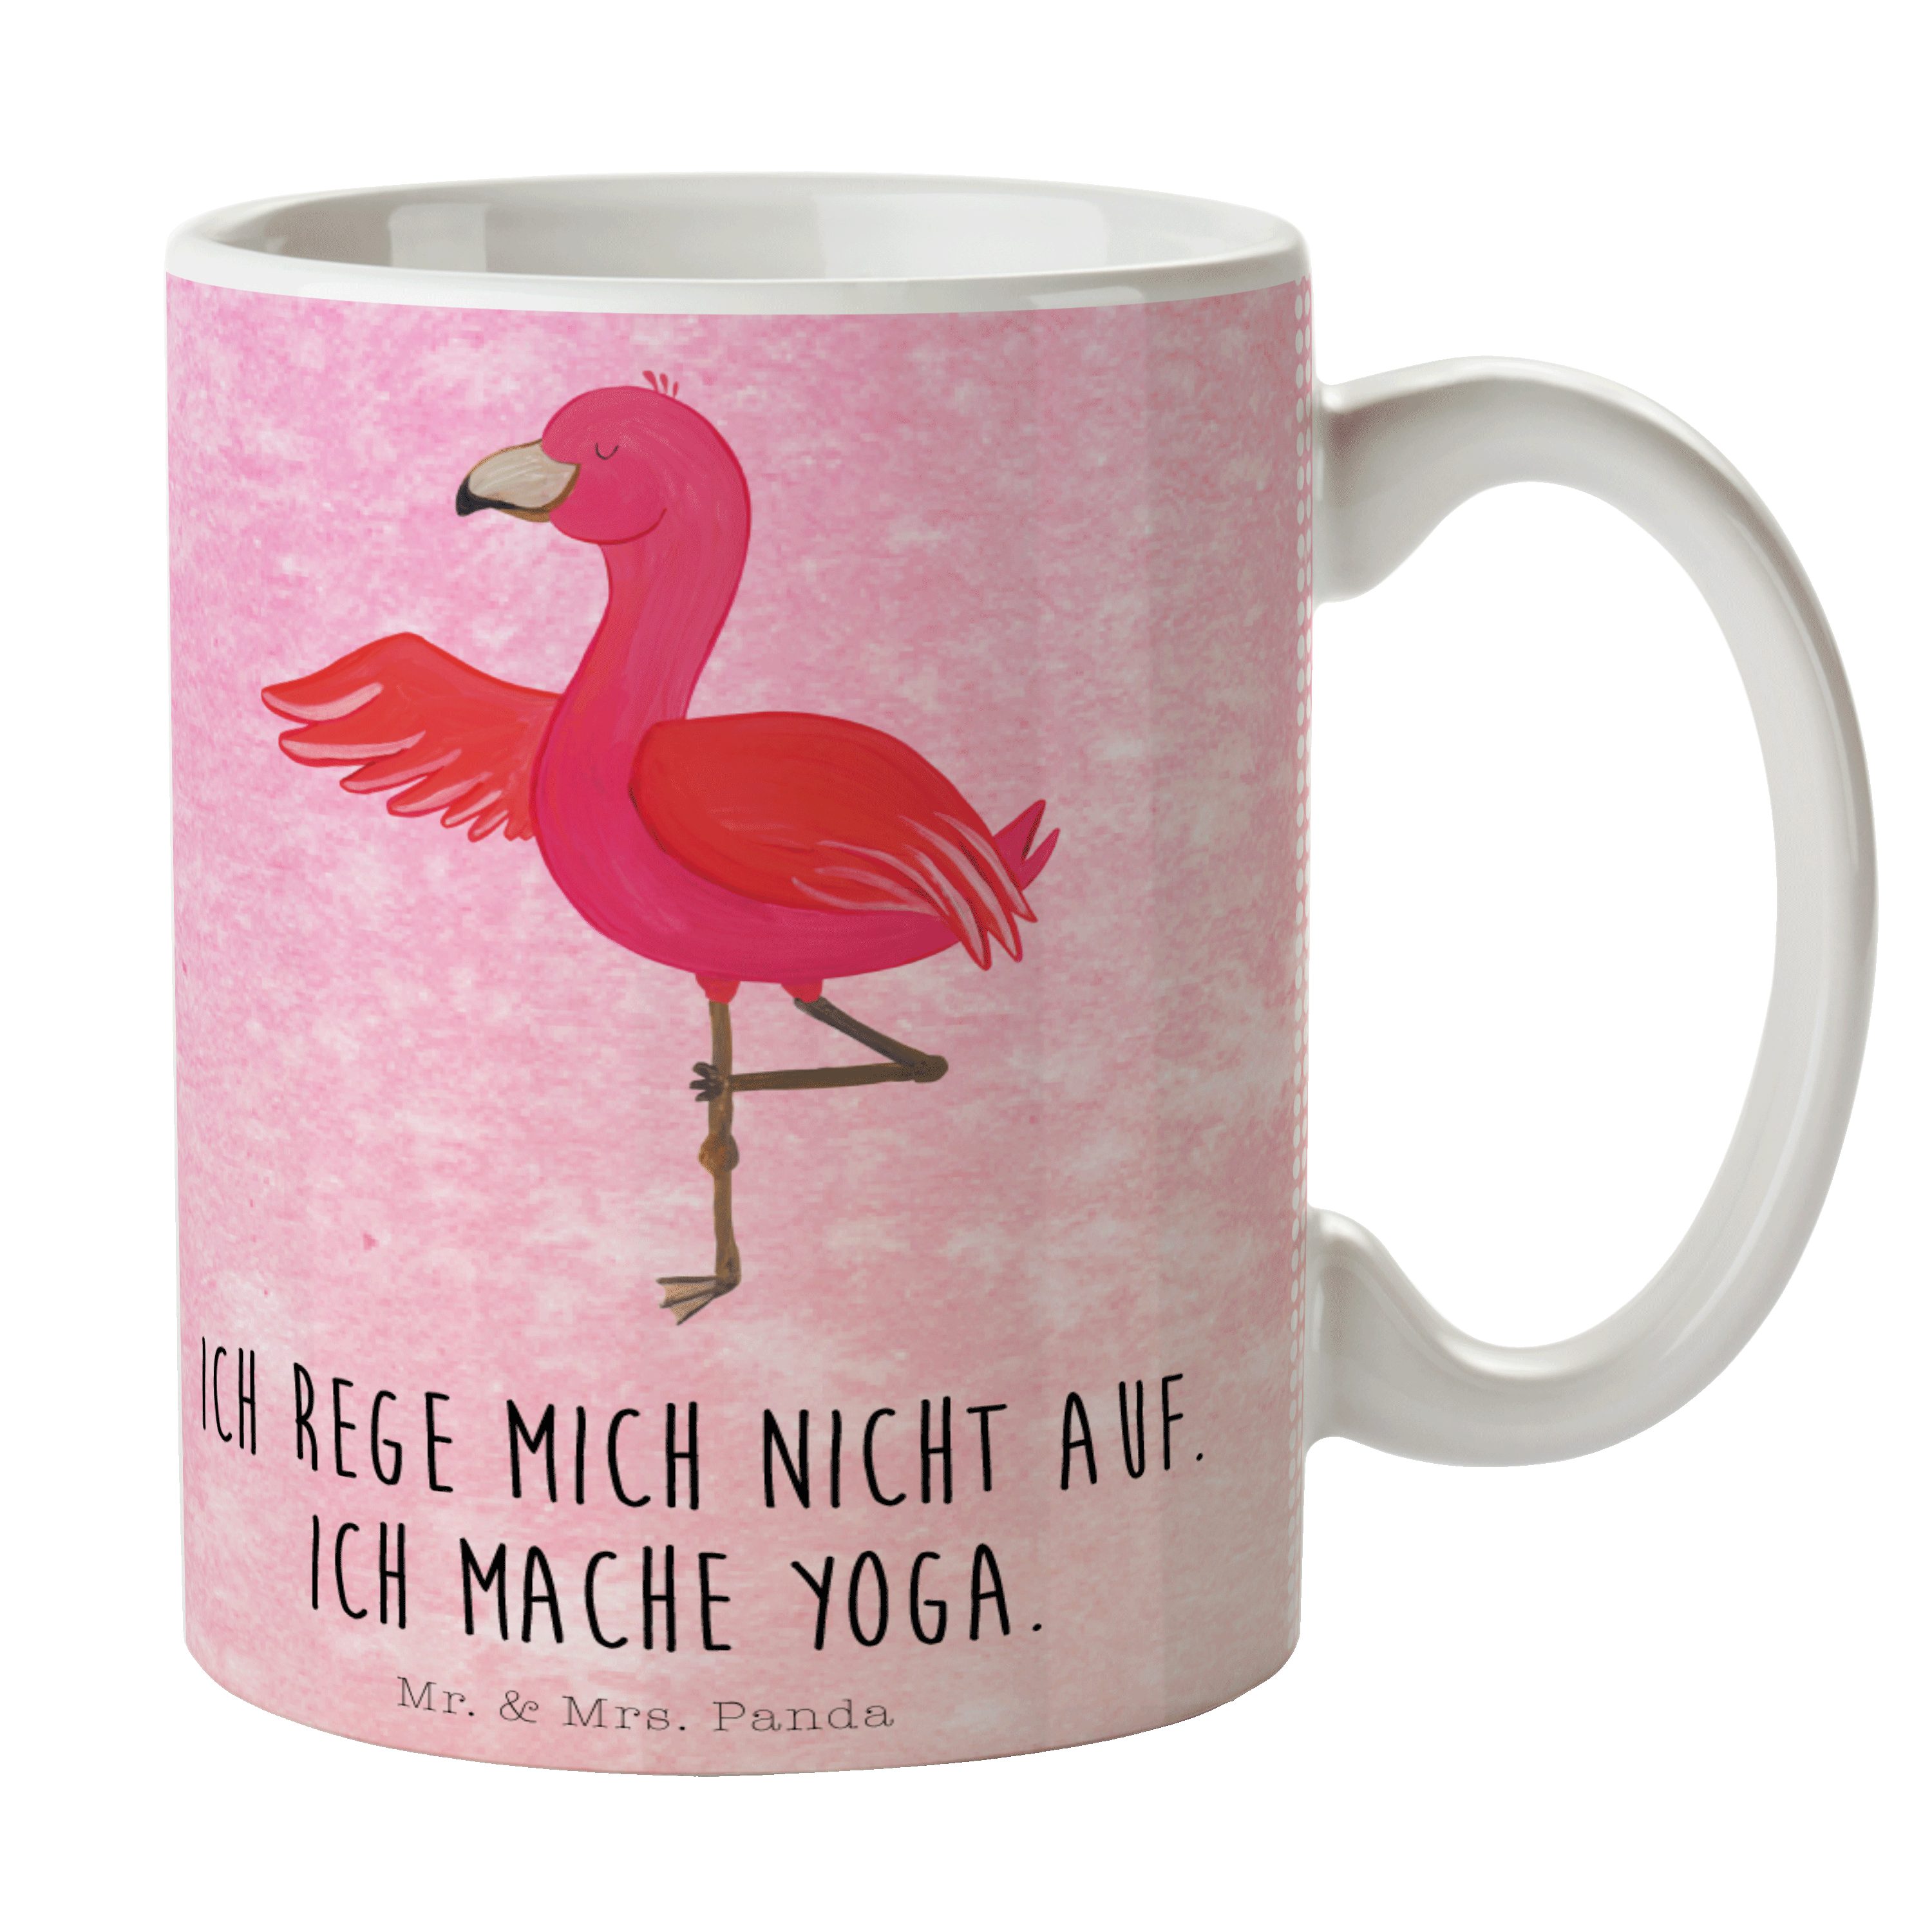 Mr. & Mrs. Panda Tasse Flamingo Yoga - Aquarell Pink - Geschenk, Namaste, Tasse Sprüche, Ker, Keramik